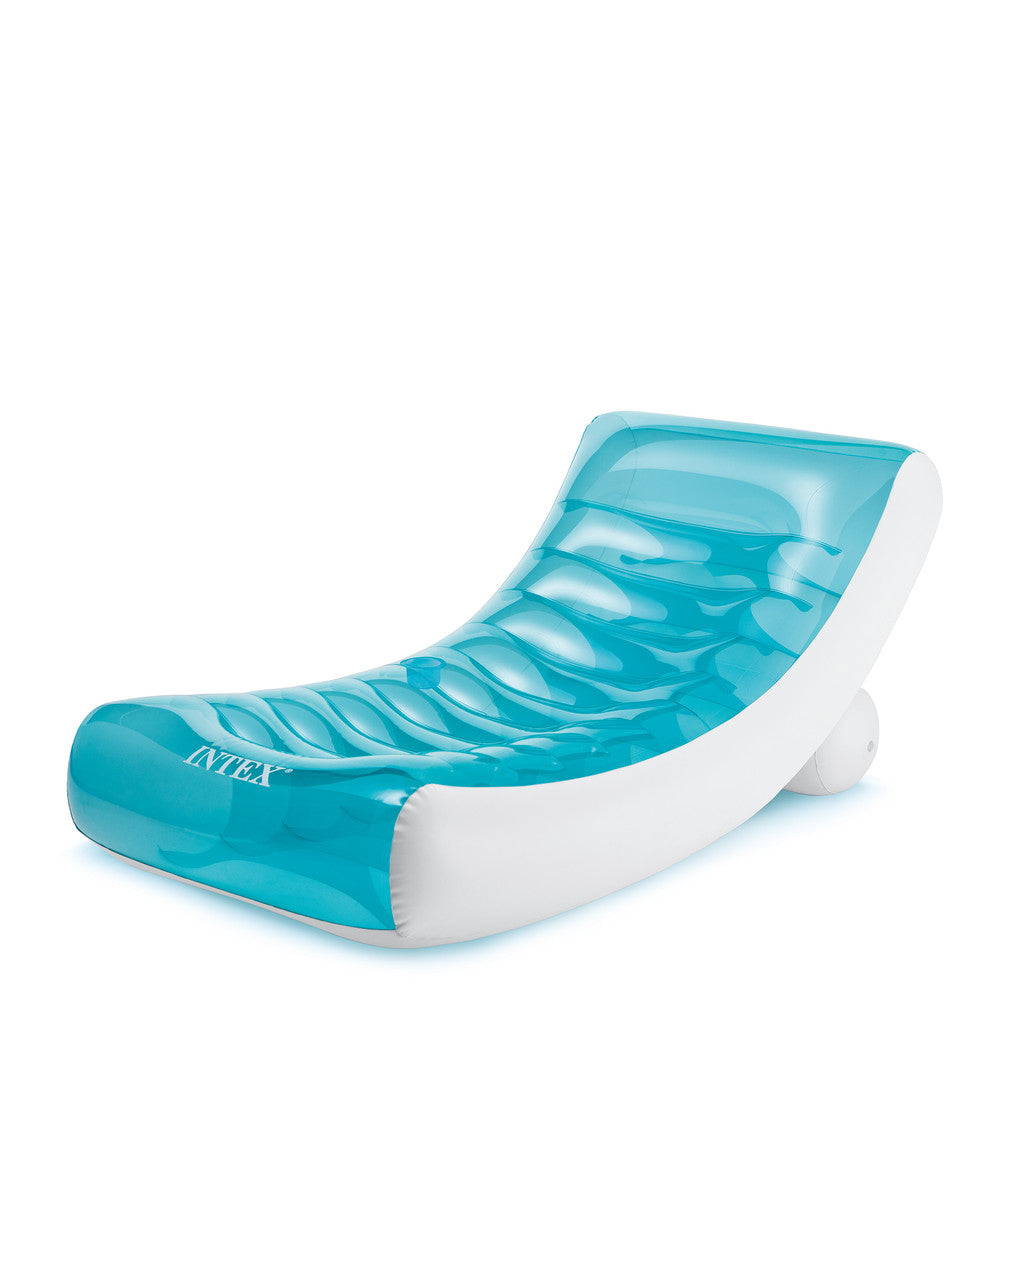 Intex Rockin' Inflatable Floating Lounge 188X99CM